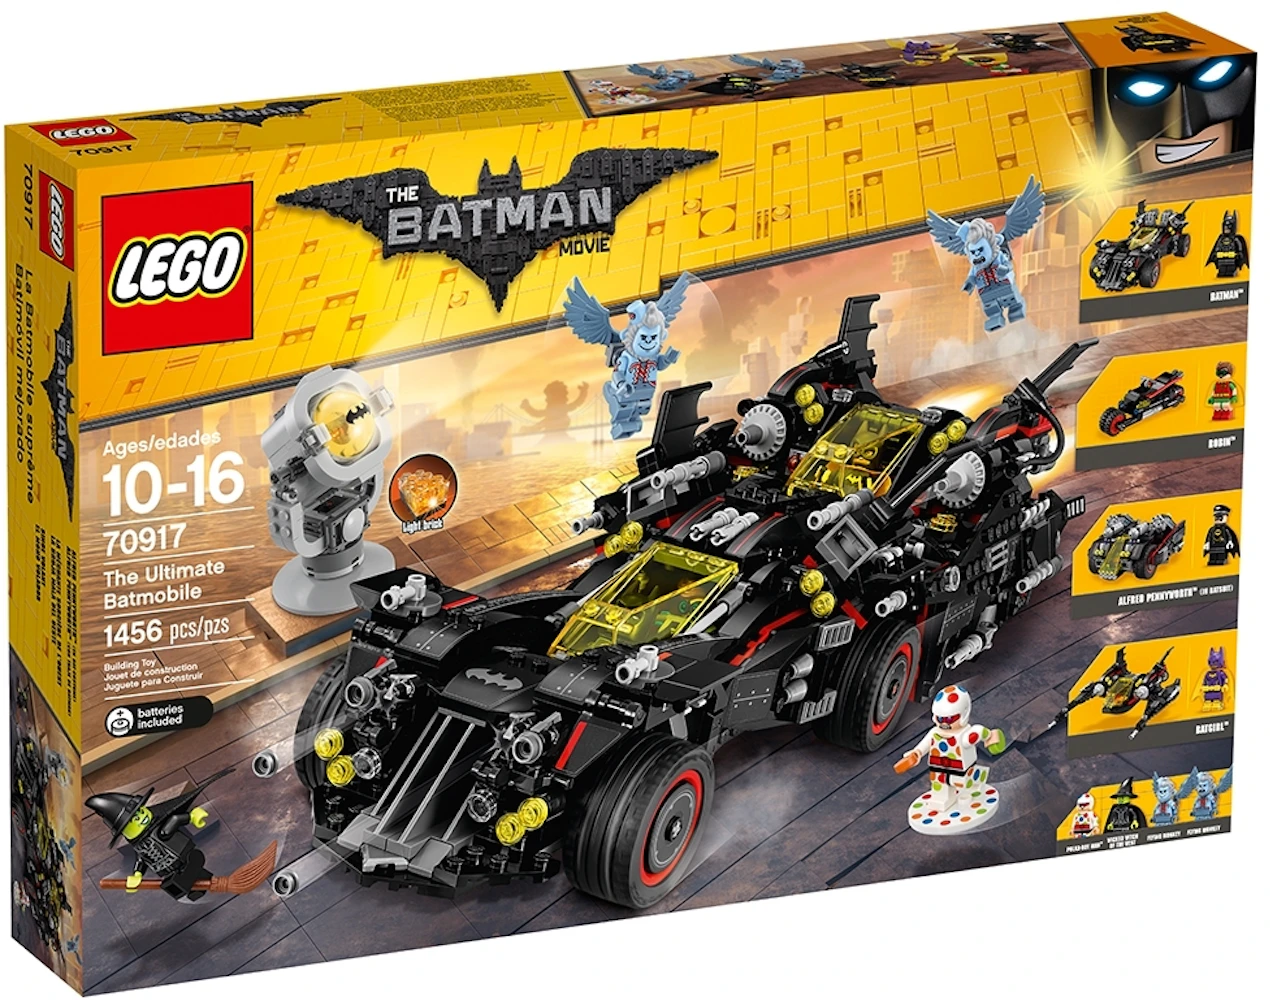 LEGO The Lego Batman Movie The Ultimate Batmobile Set 70917 - IT